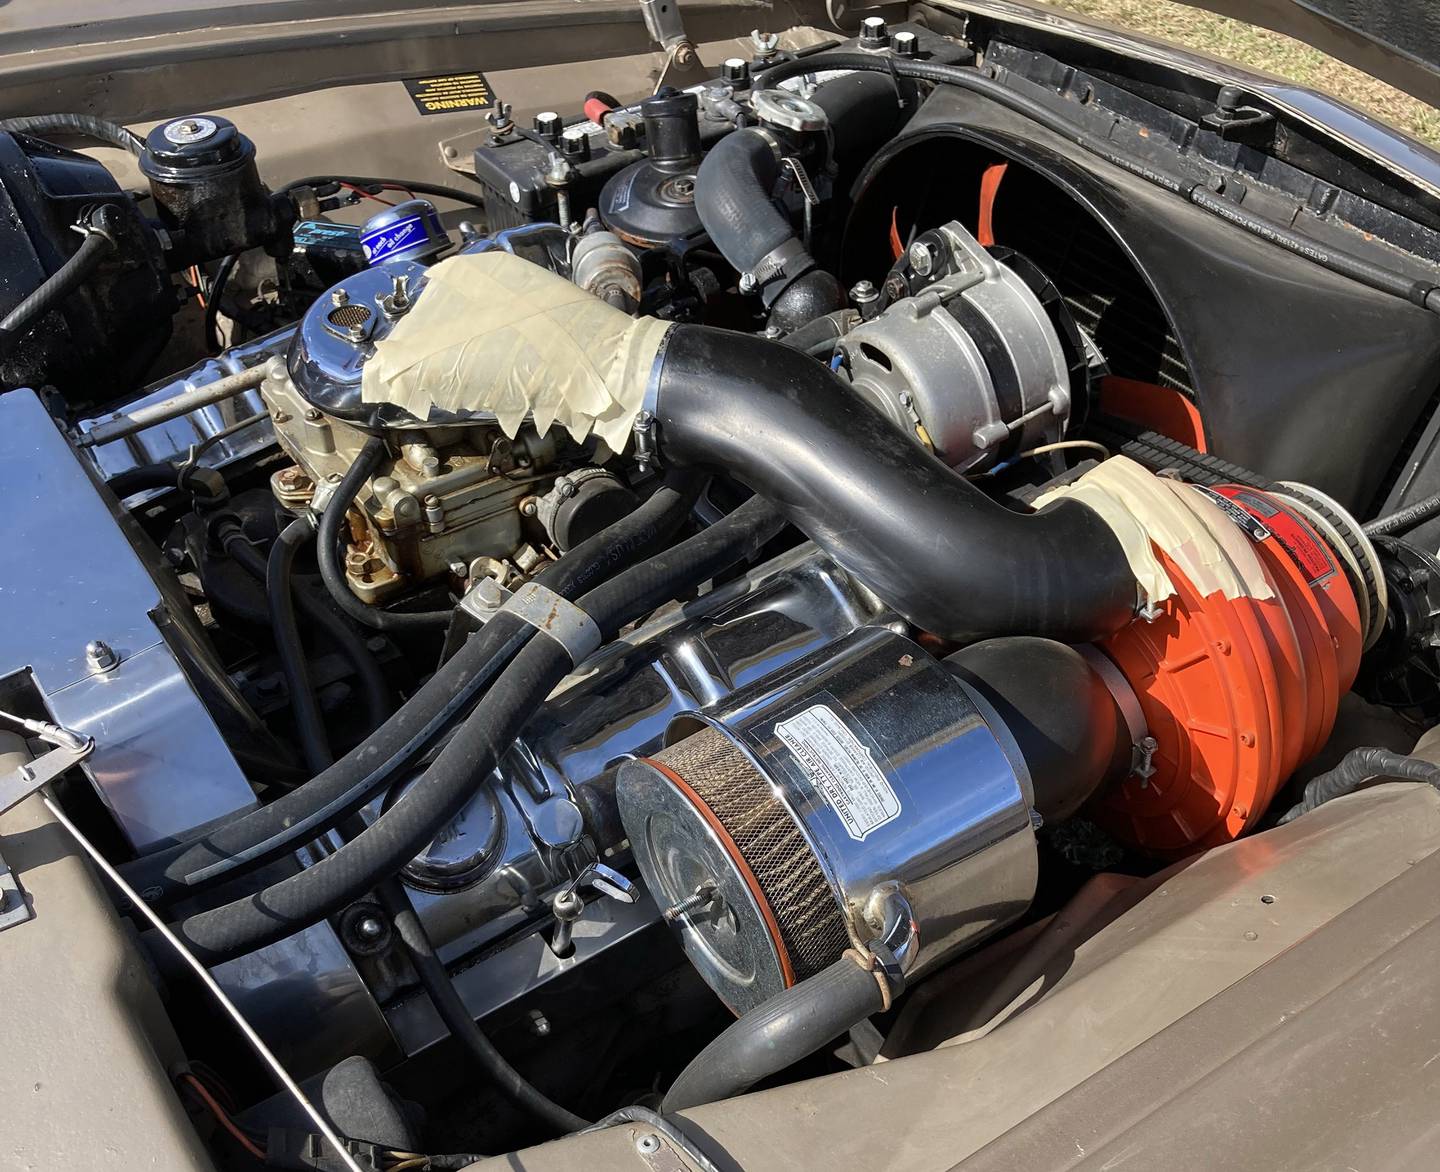 Photos by Steve Rubens - 1963 Studebaker Avanti Engine